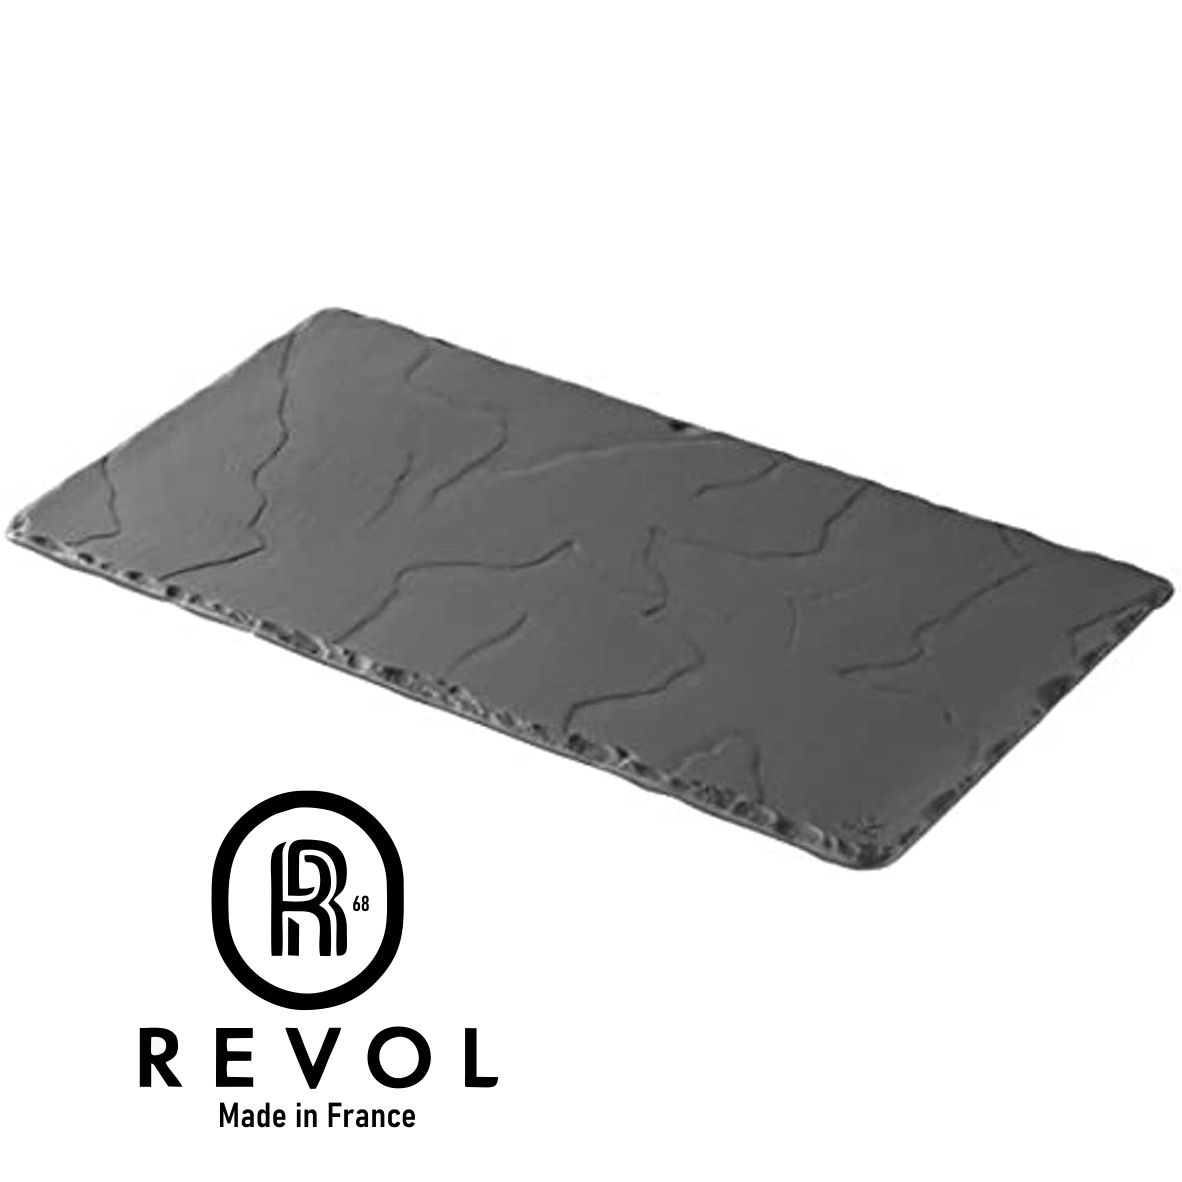 Revol porcelain plate rectangular shape Basalt collection